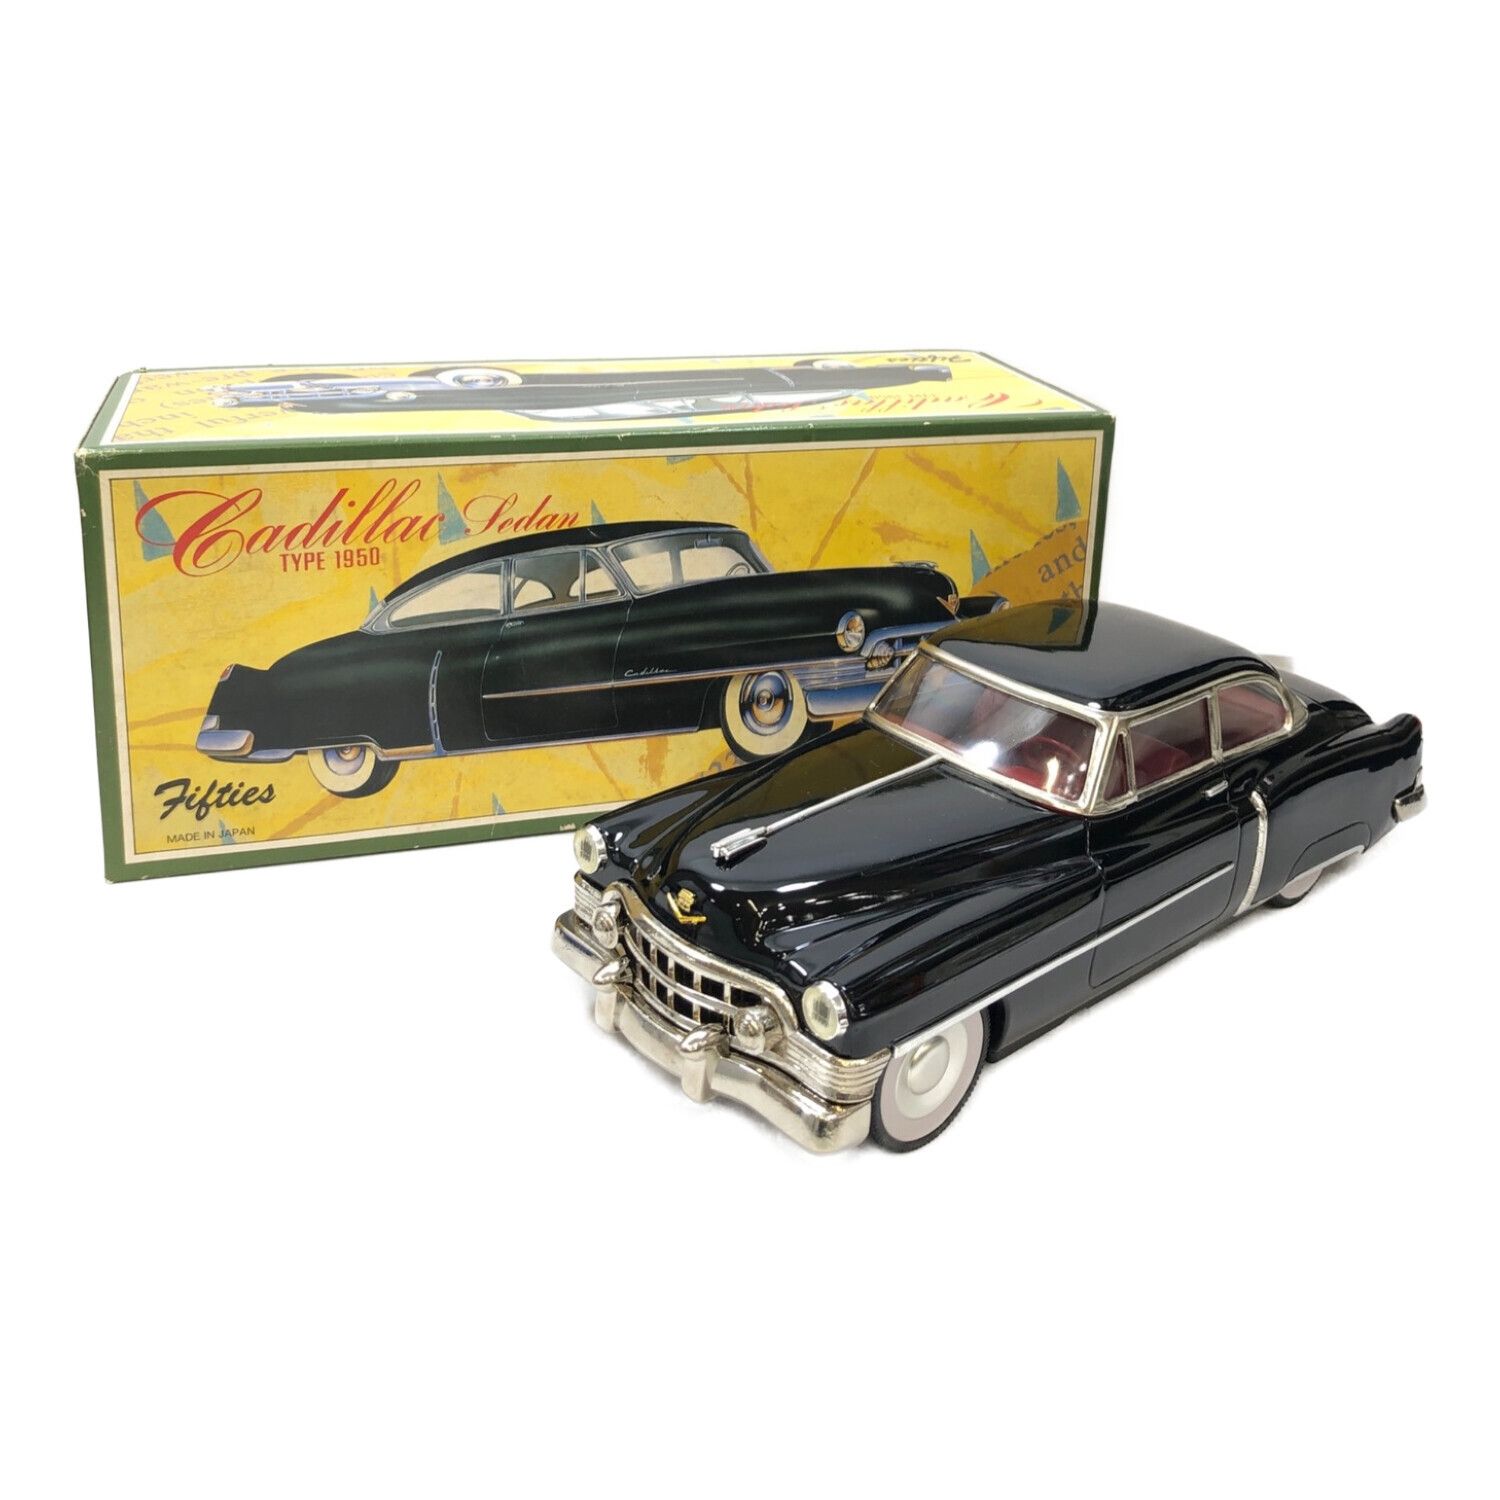 fifties Cadillac 1950 セダン モデルカー ミニカー - csihealth.net